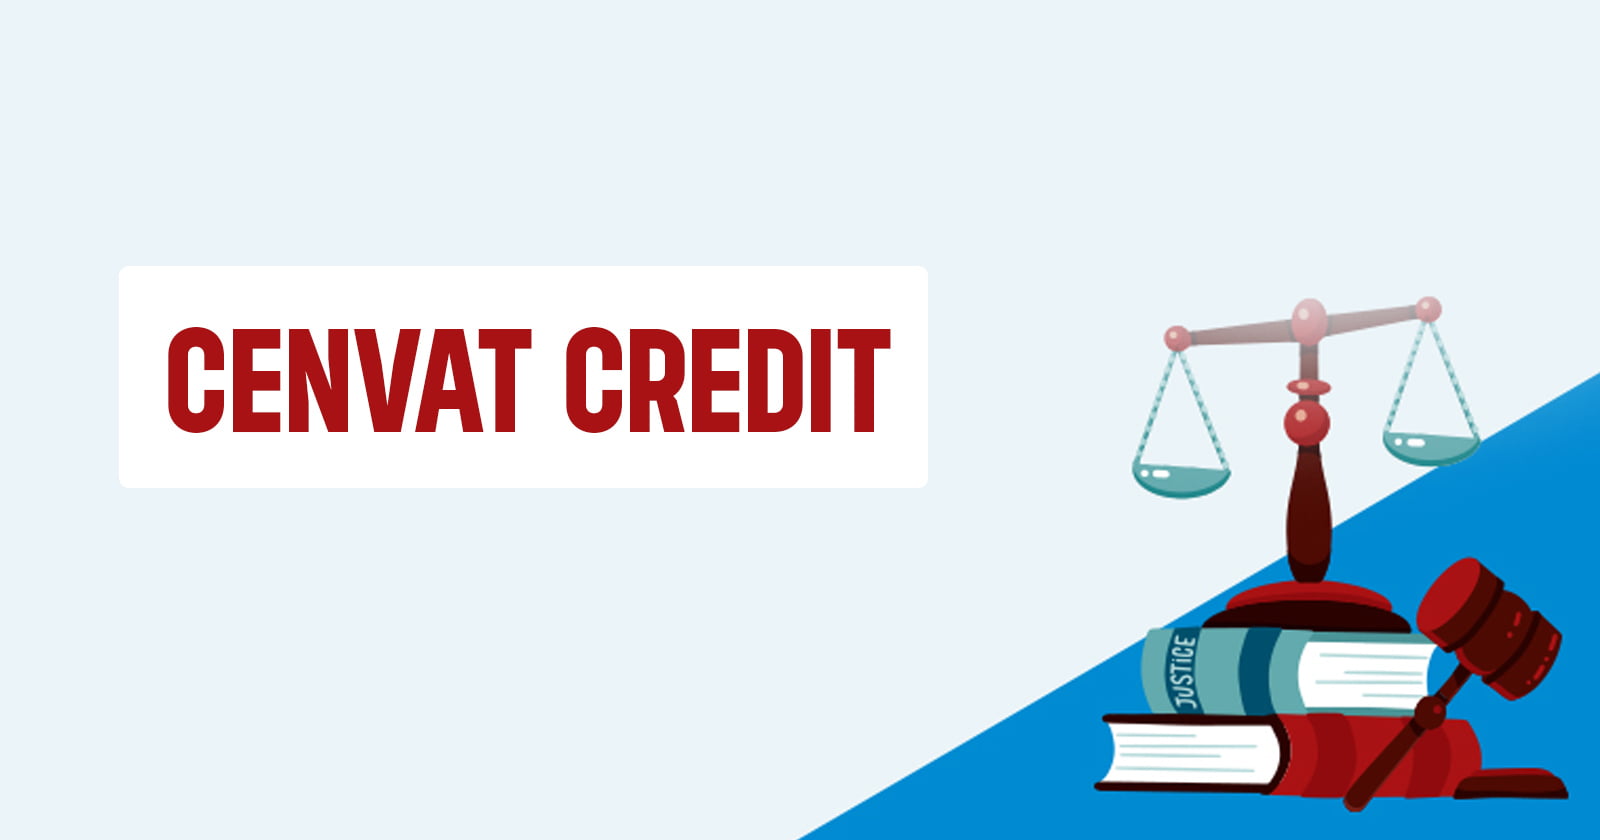 CESTAT - CESTAT Chennai - Service tax - Cenvat Credit - Financial Services - TAXSCAN